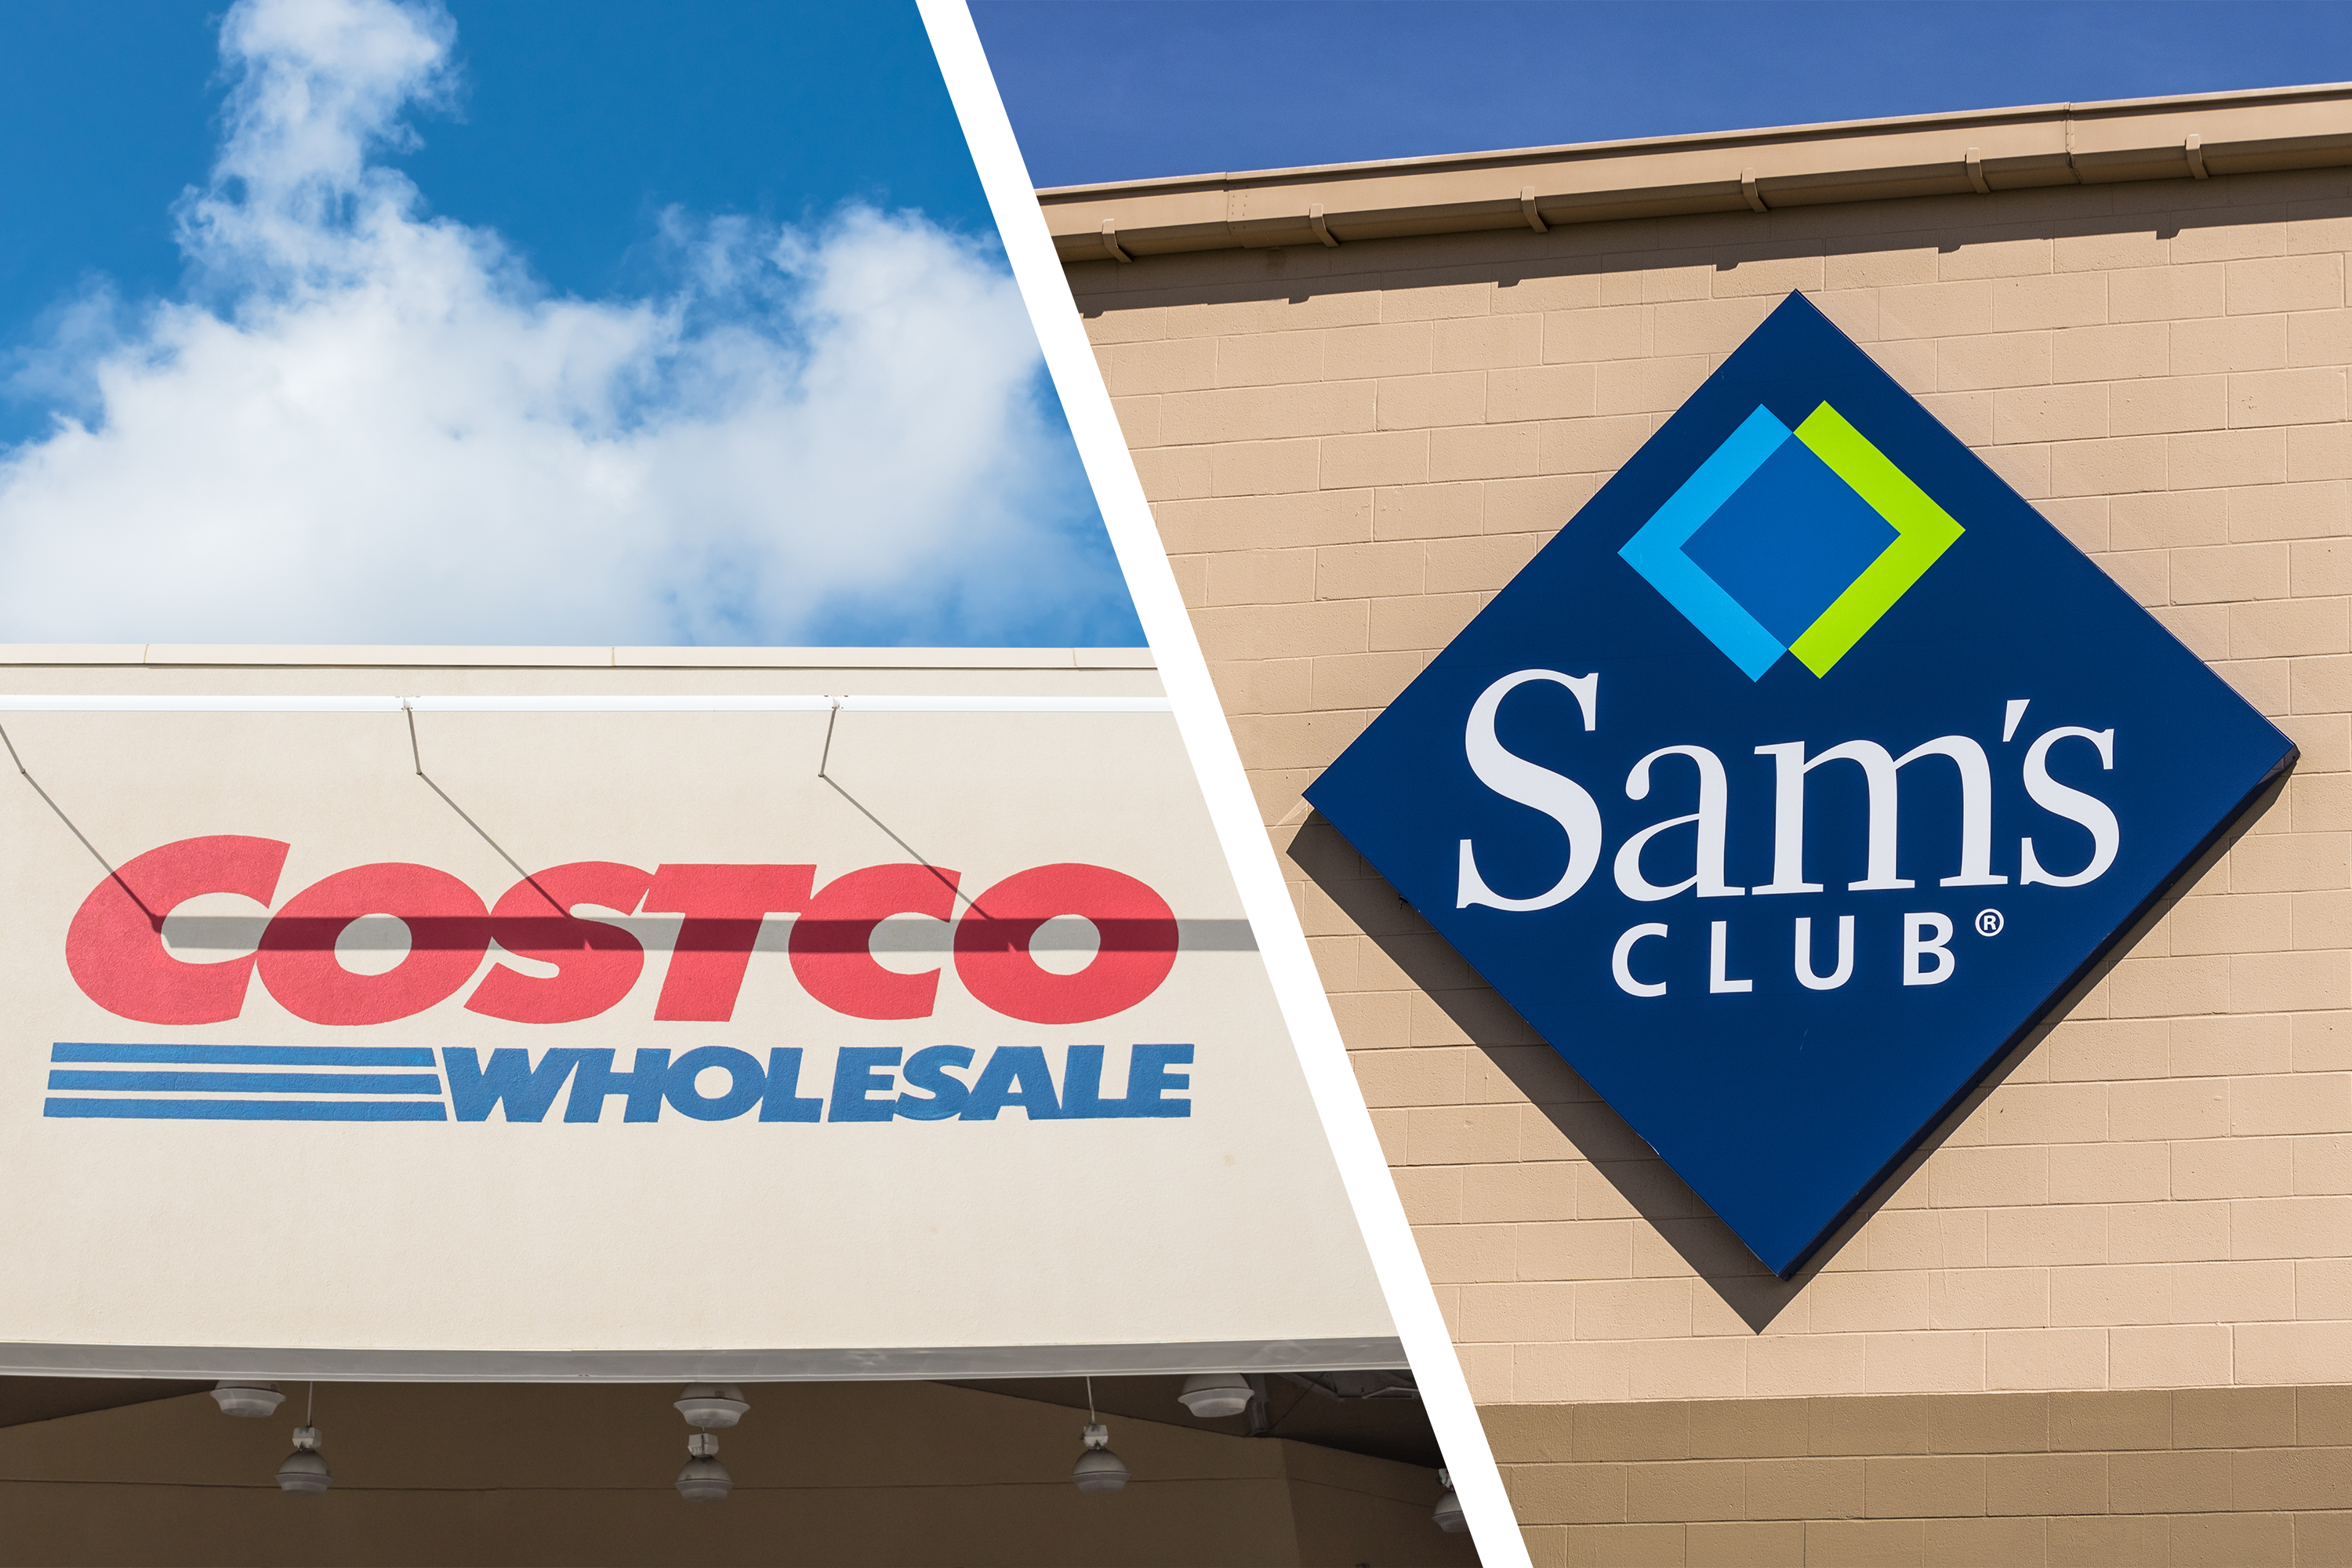 Costco vs. Sam's Club Food Court Comparison: Menu, Reviews, Prices